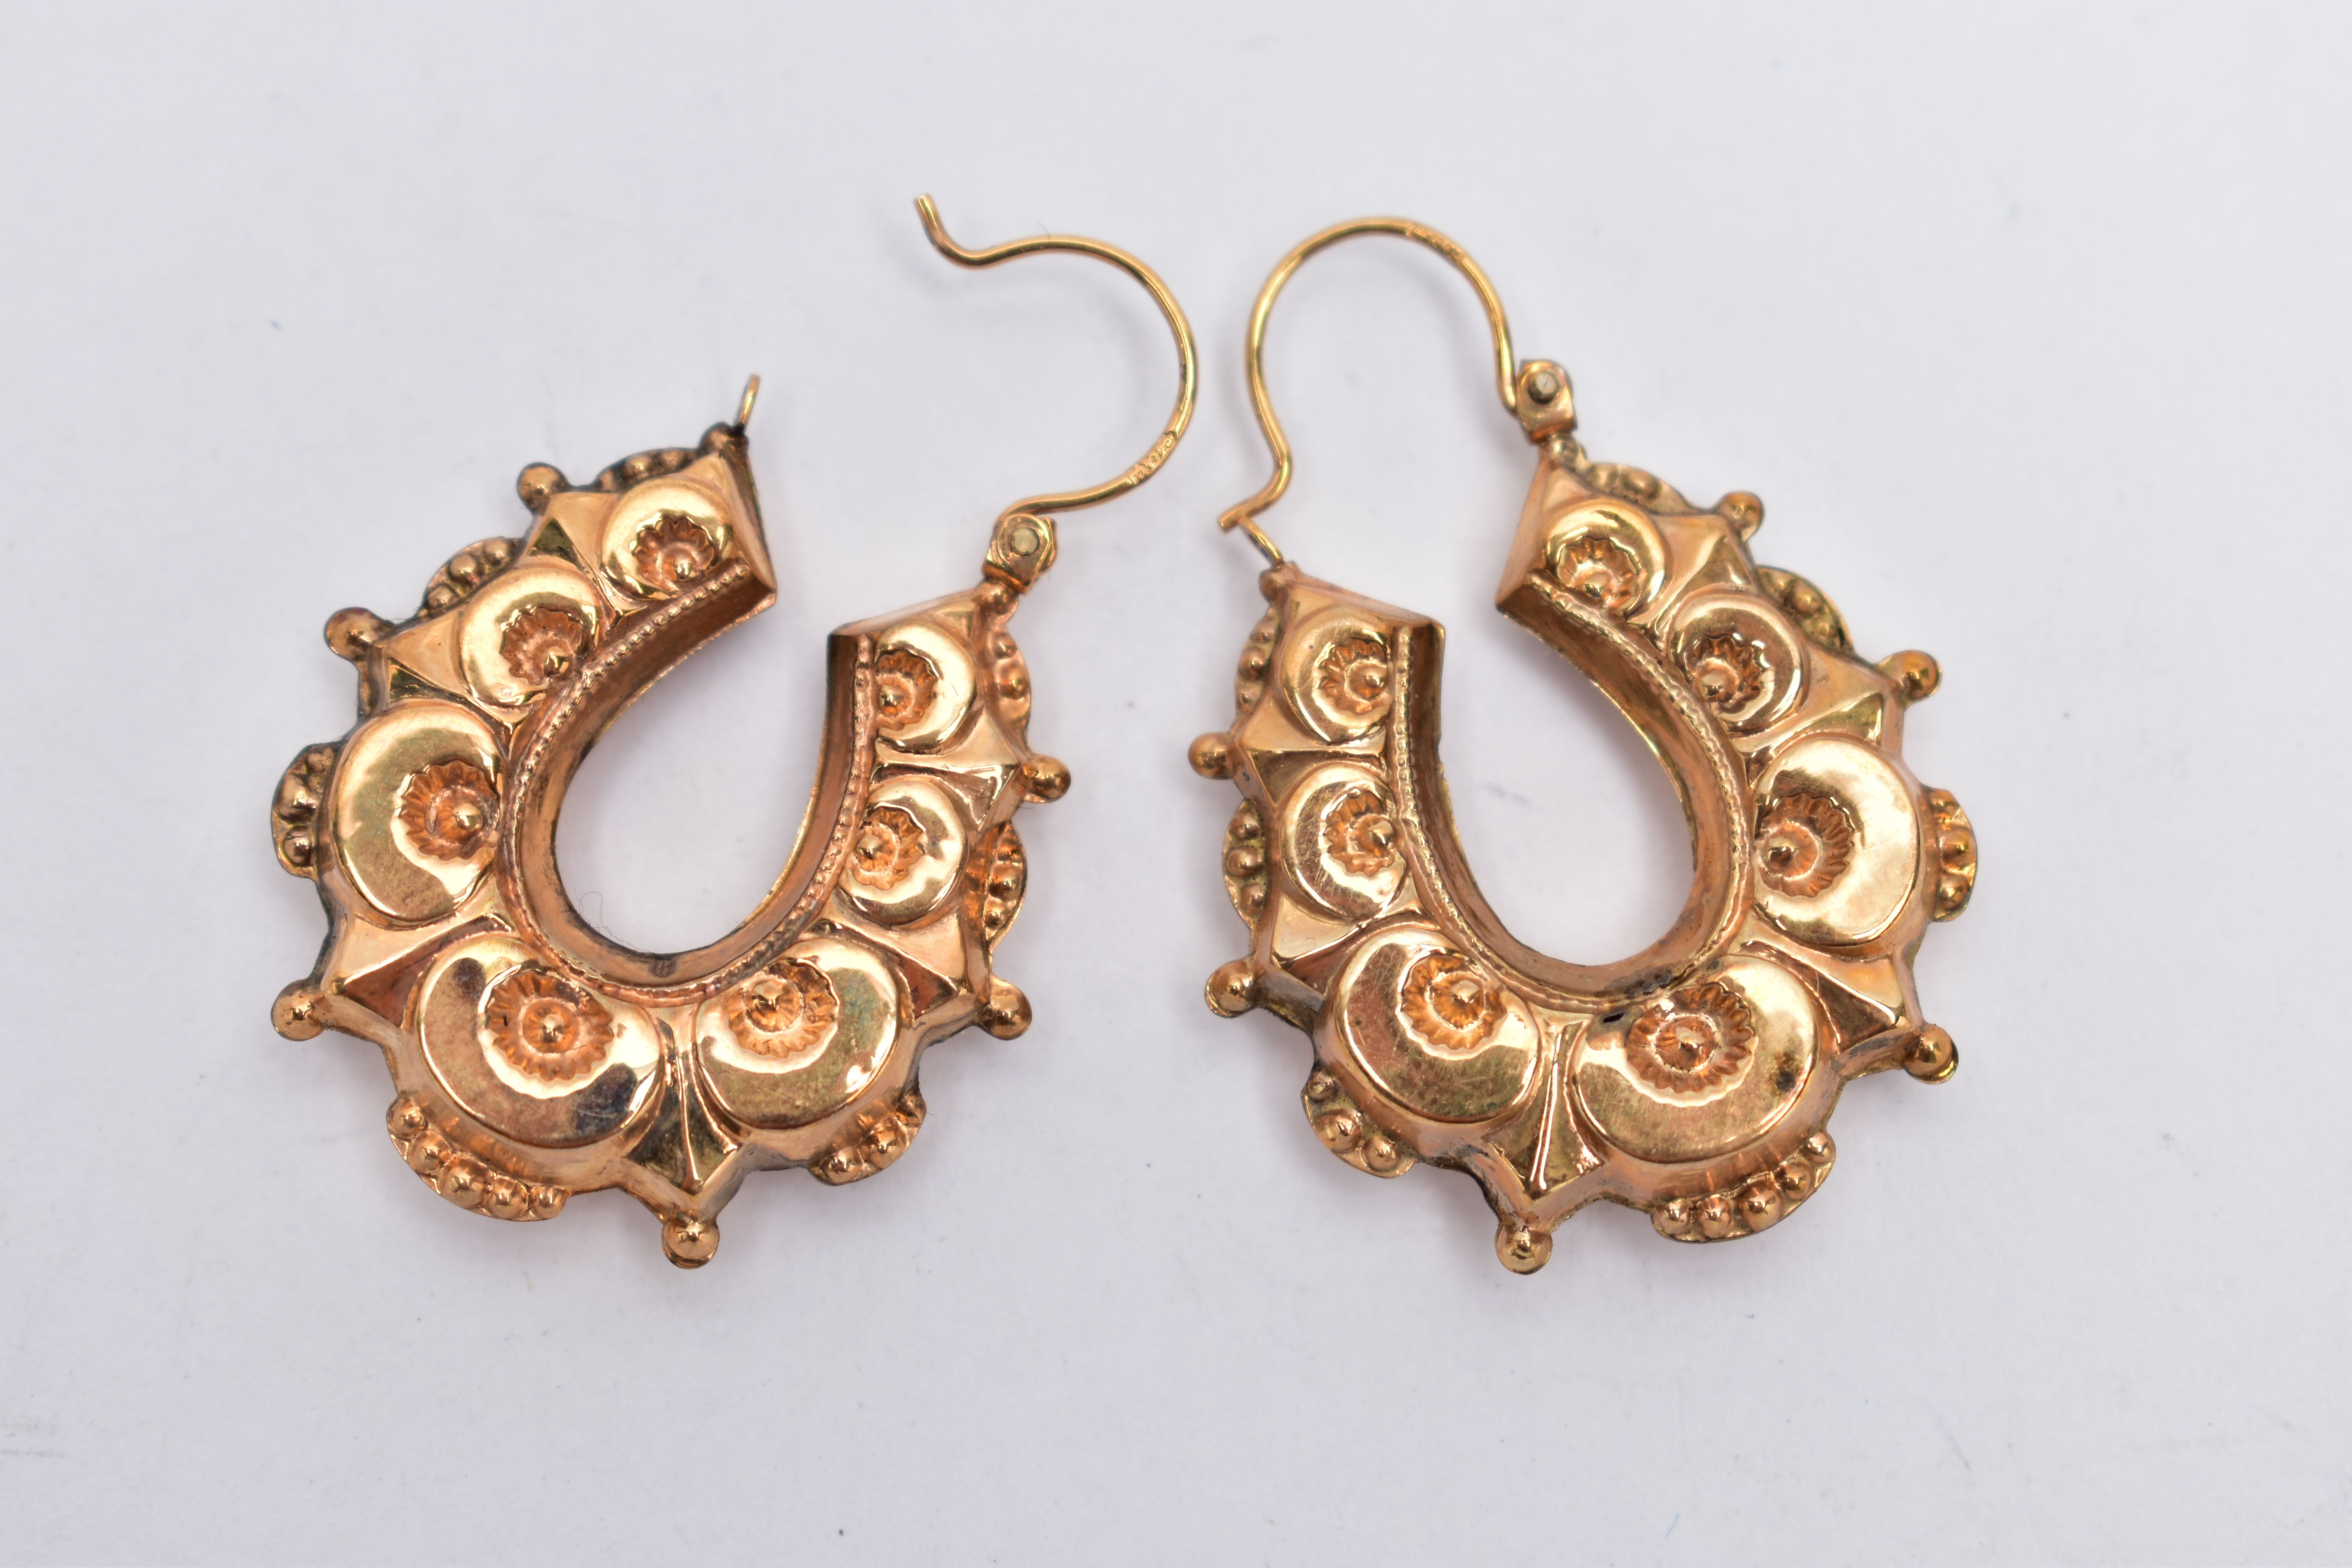 A PAIR OF 9CT GOLD CREOLE HOOP EARRINGS, a pair of large hollow creole hoop earrings, fitted with